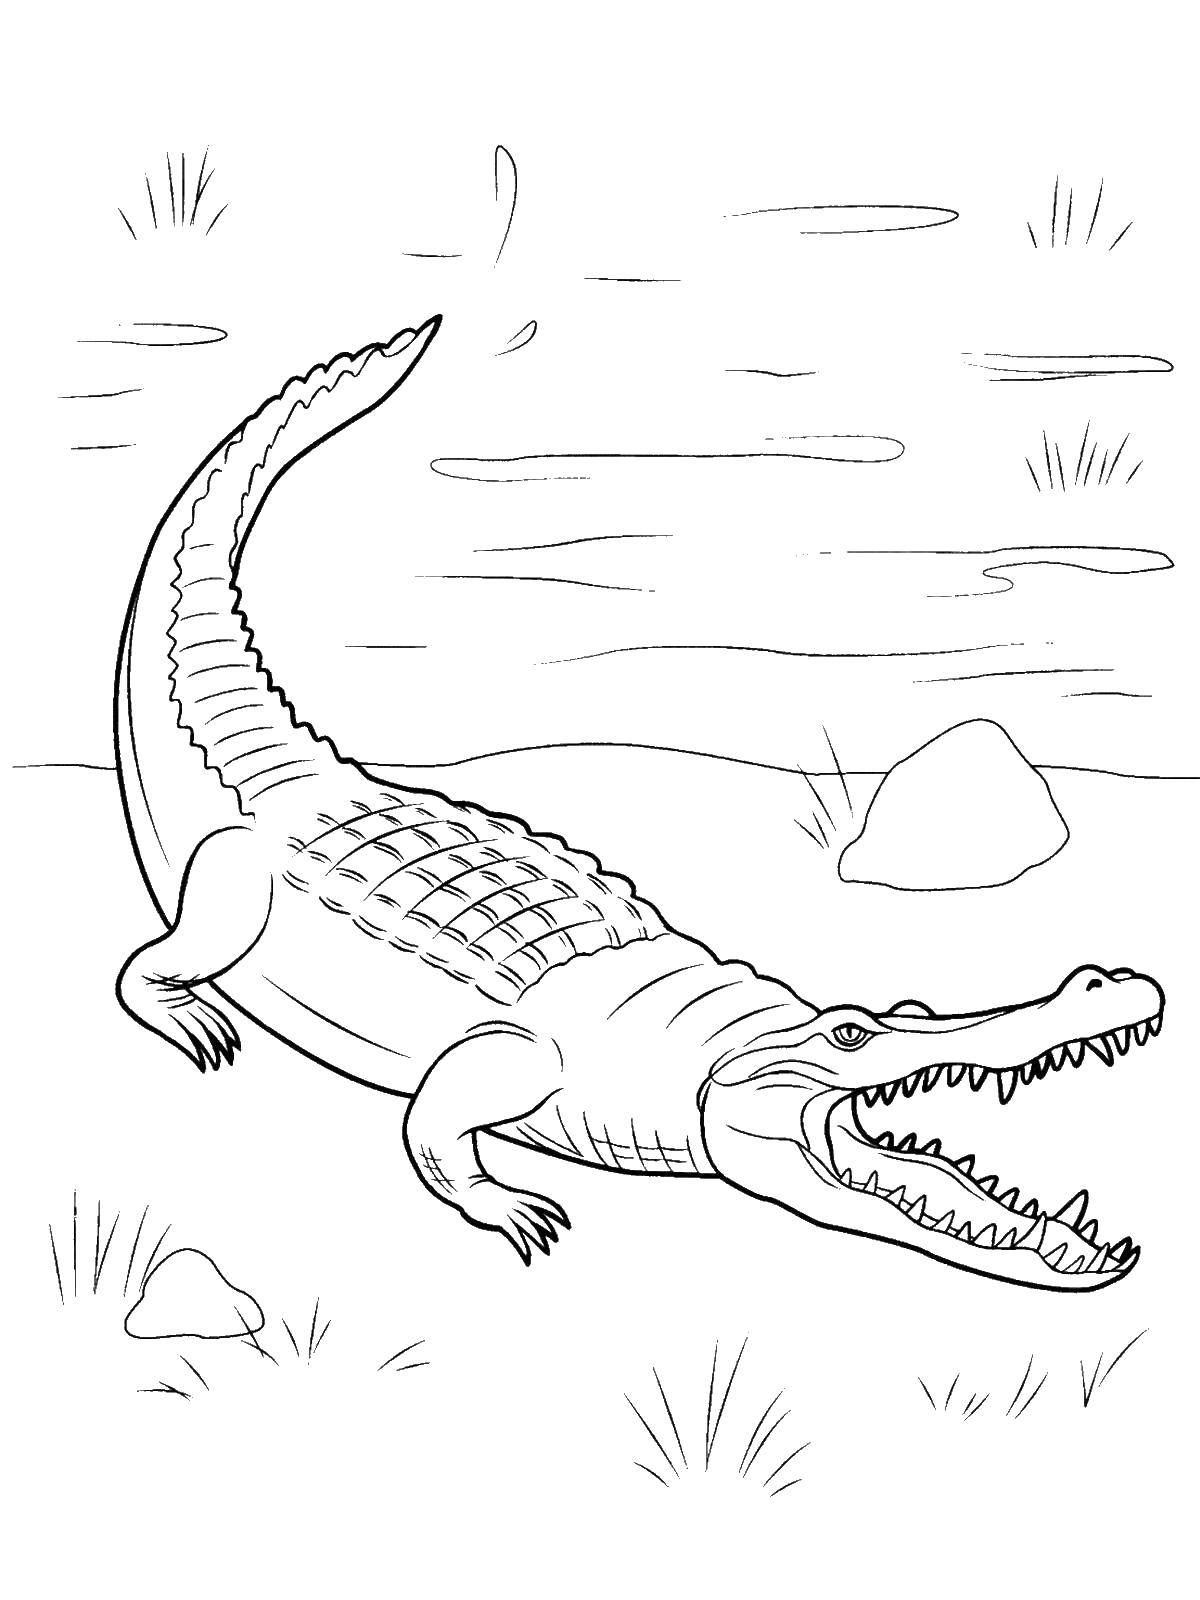 Название: Раскраска Аллигатор. Категория: рептилии. Теги: Рептилия, крокодил.